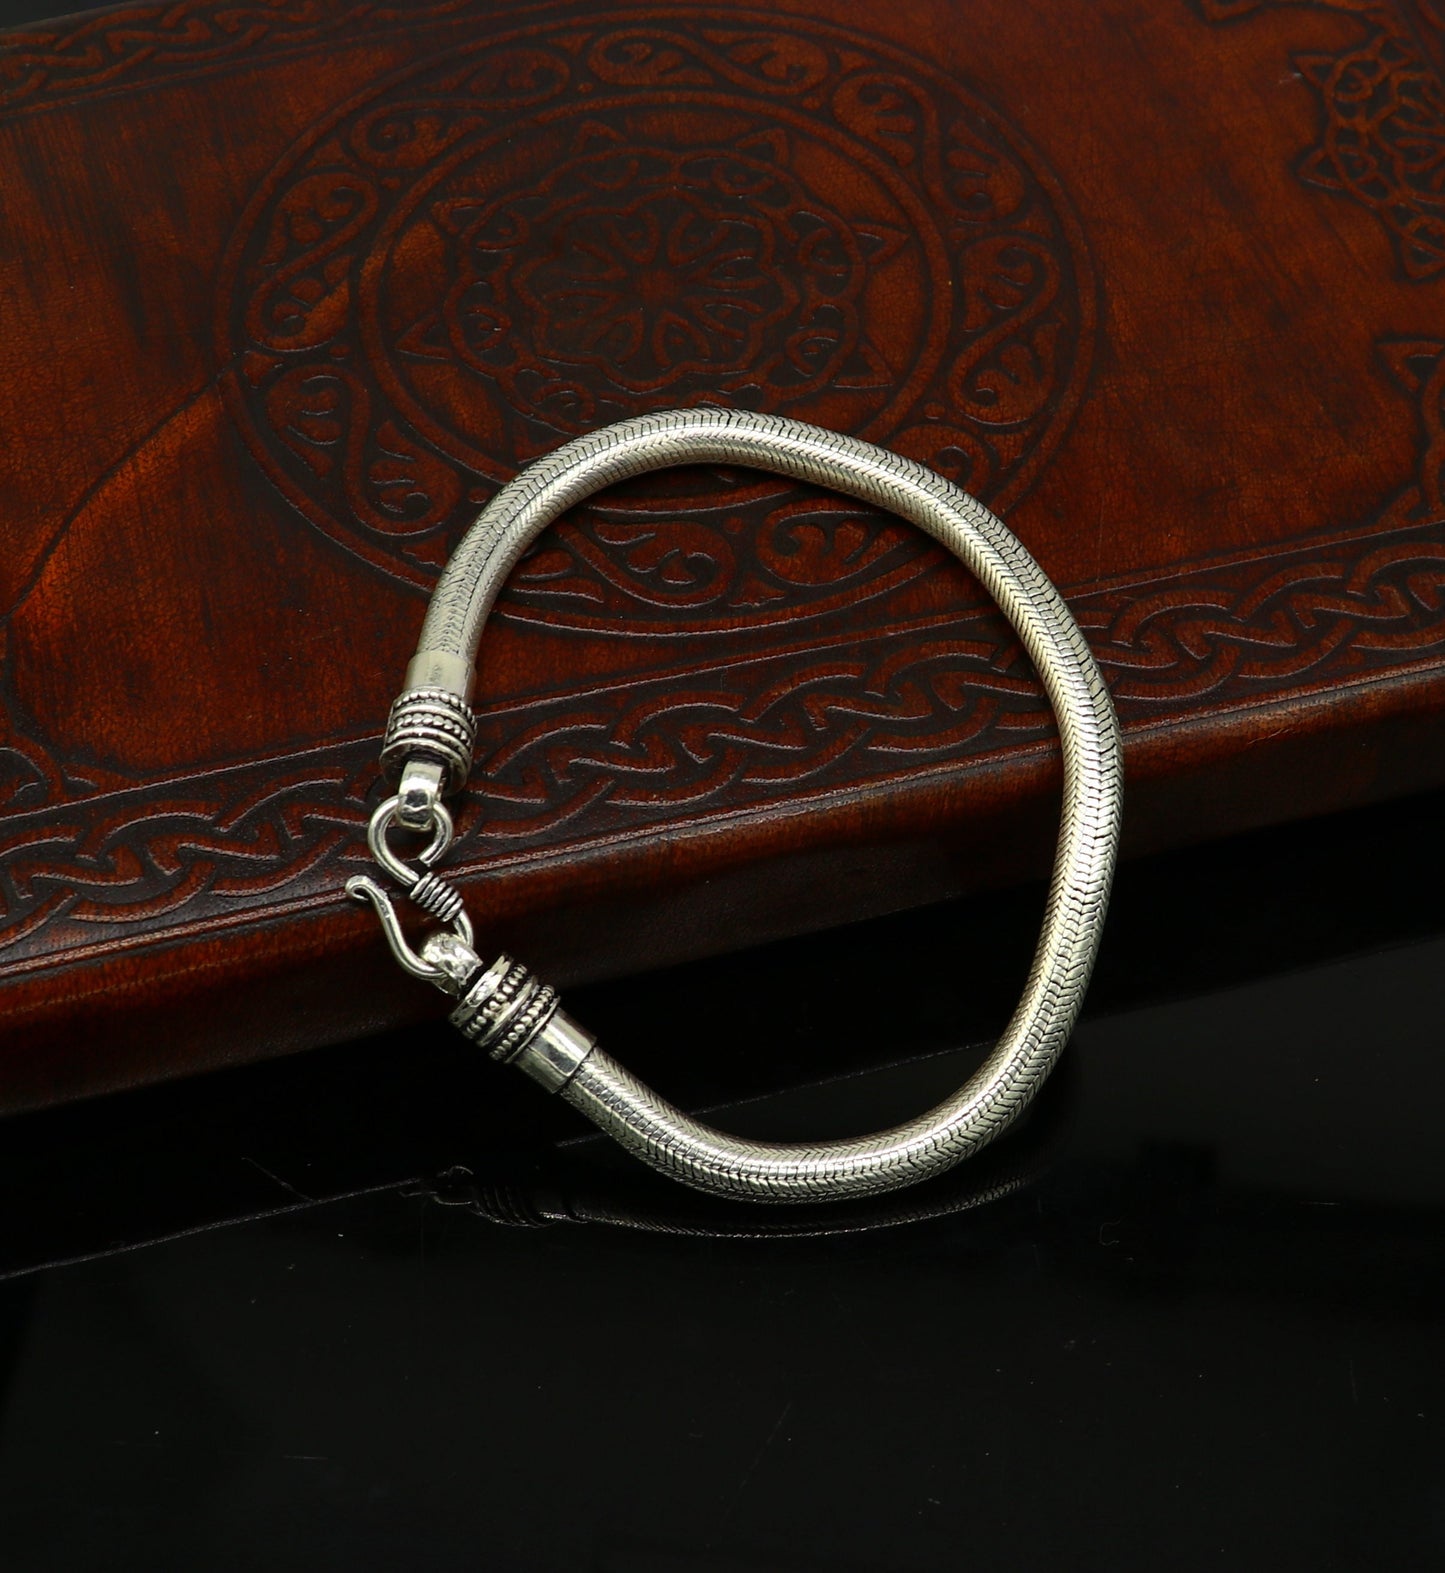 5mm 925 sterling silver best gifting 9" long handmade snake chain bracelet, new stylish fancy customized trendy bracelet jewelry nsbr217 - TRIBAL ORNAMENTS